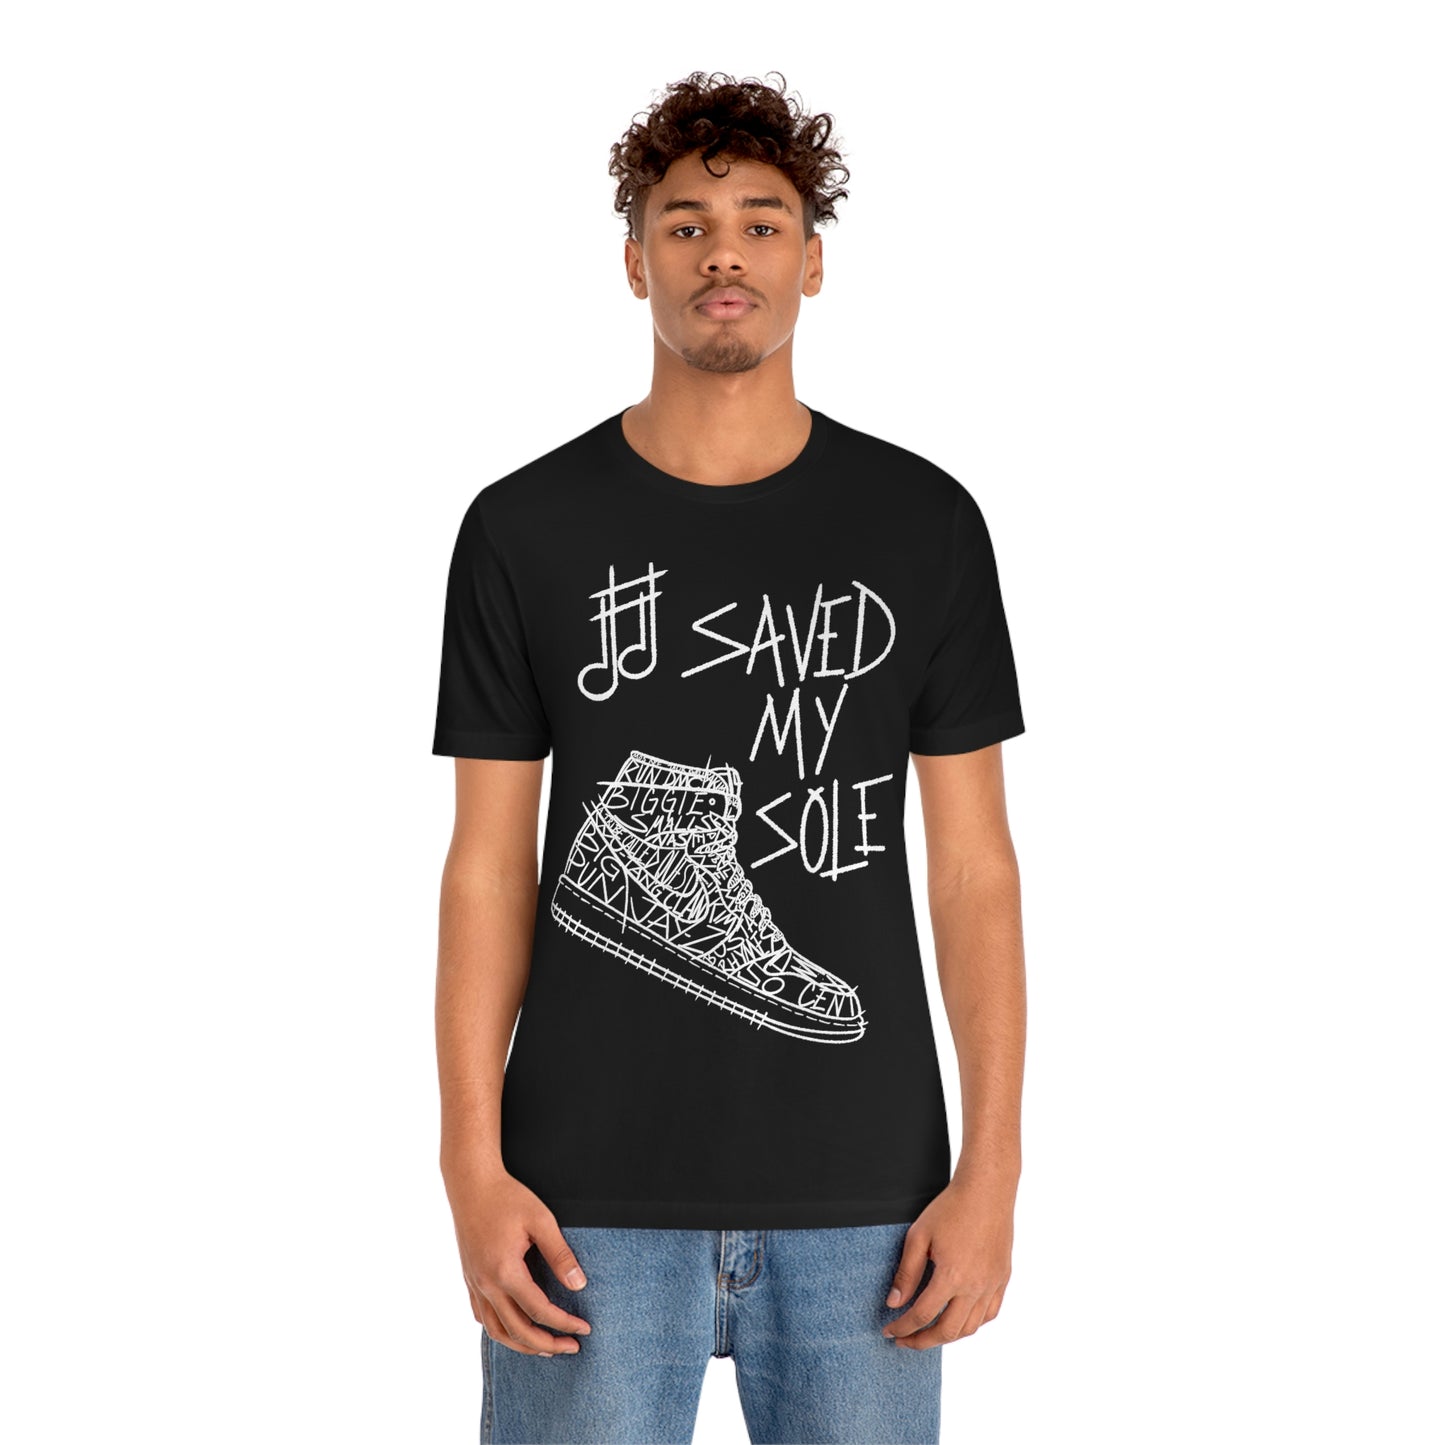 'Music Saved My Sole' East Coast Unisex T-shirt